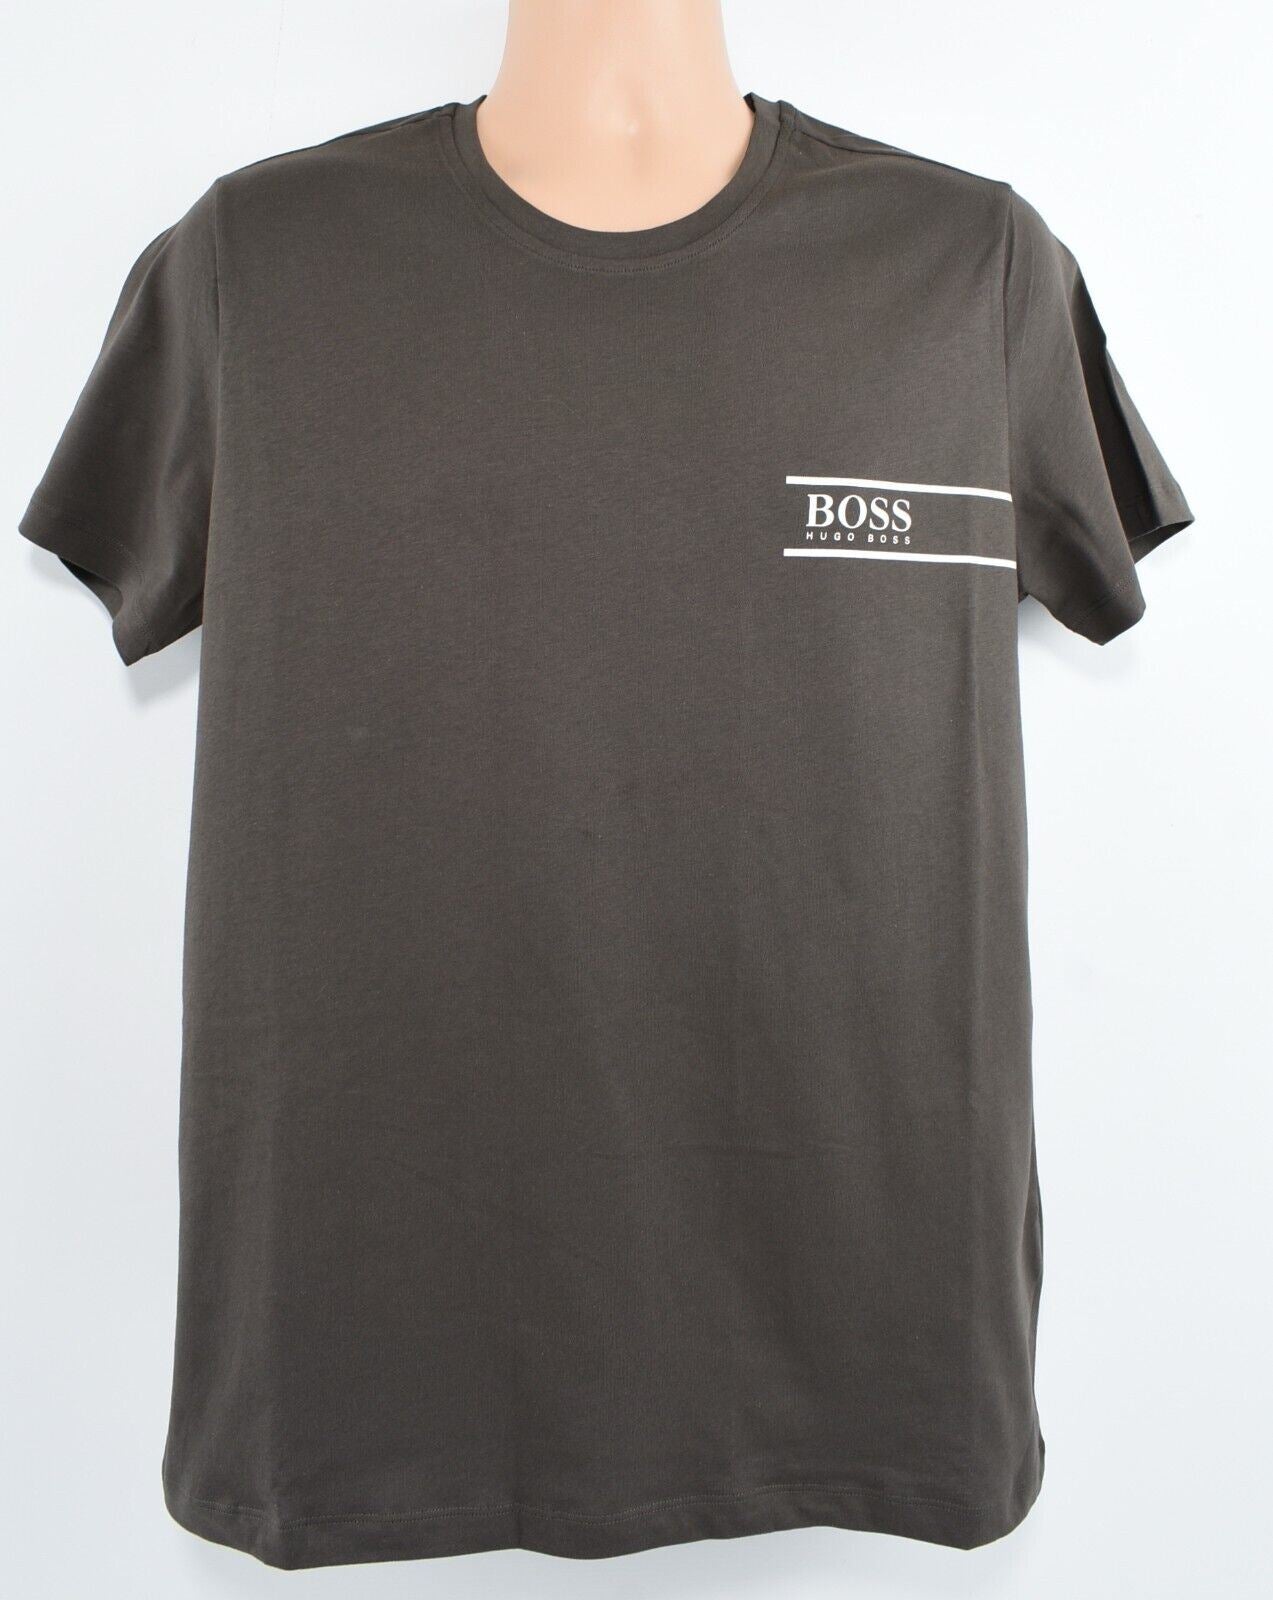 HUGO BOSS Men's Pure Cotton Short Sleeve T-shirt, Grey, size SMALL